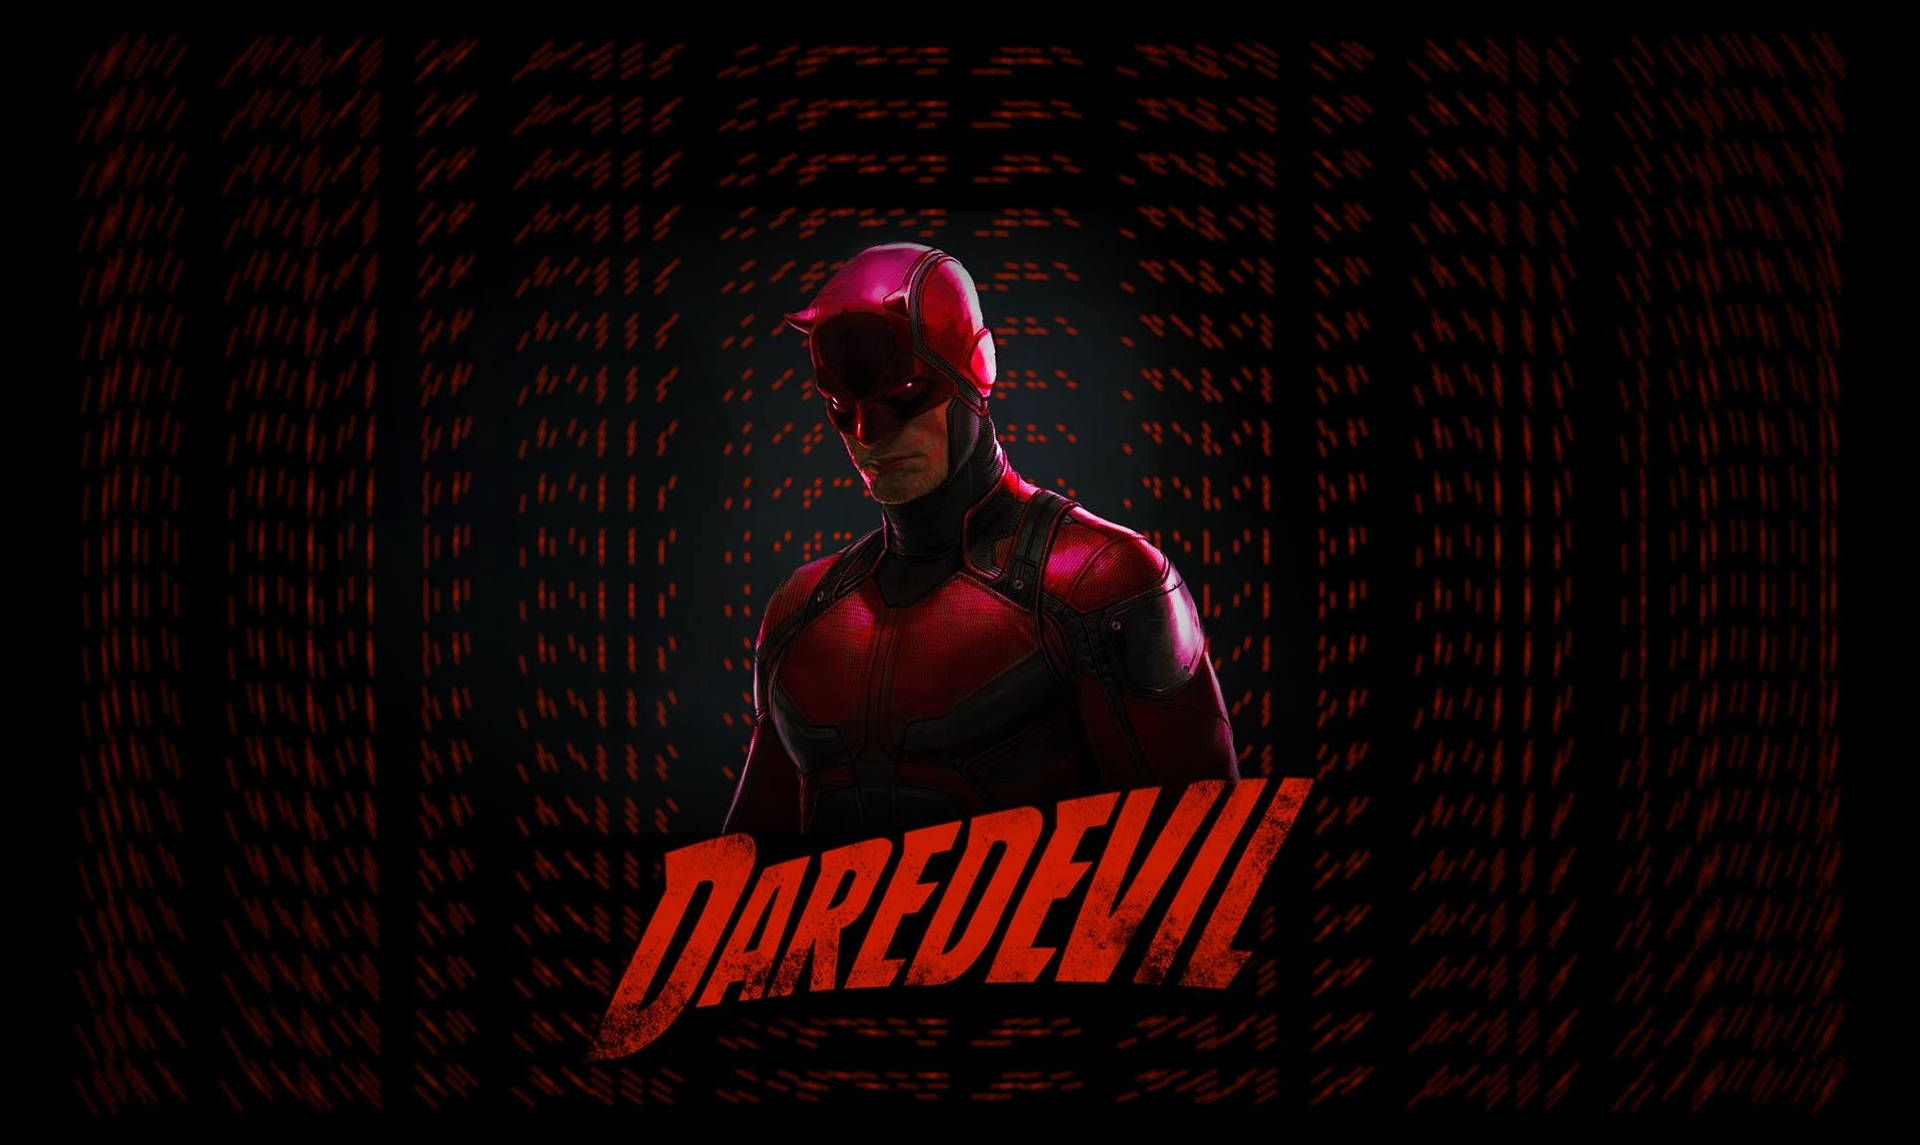 Free Daredevil Wallpaper Downloads, [200+] Daredevil Wallpapers for FREE |  